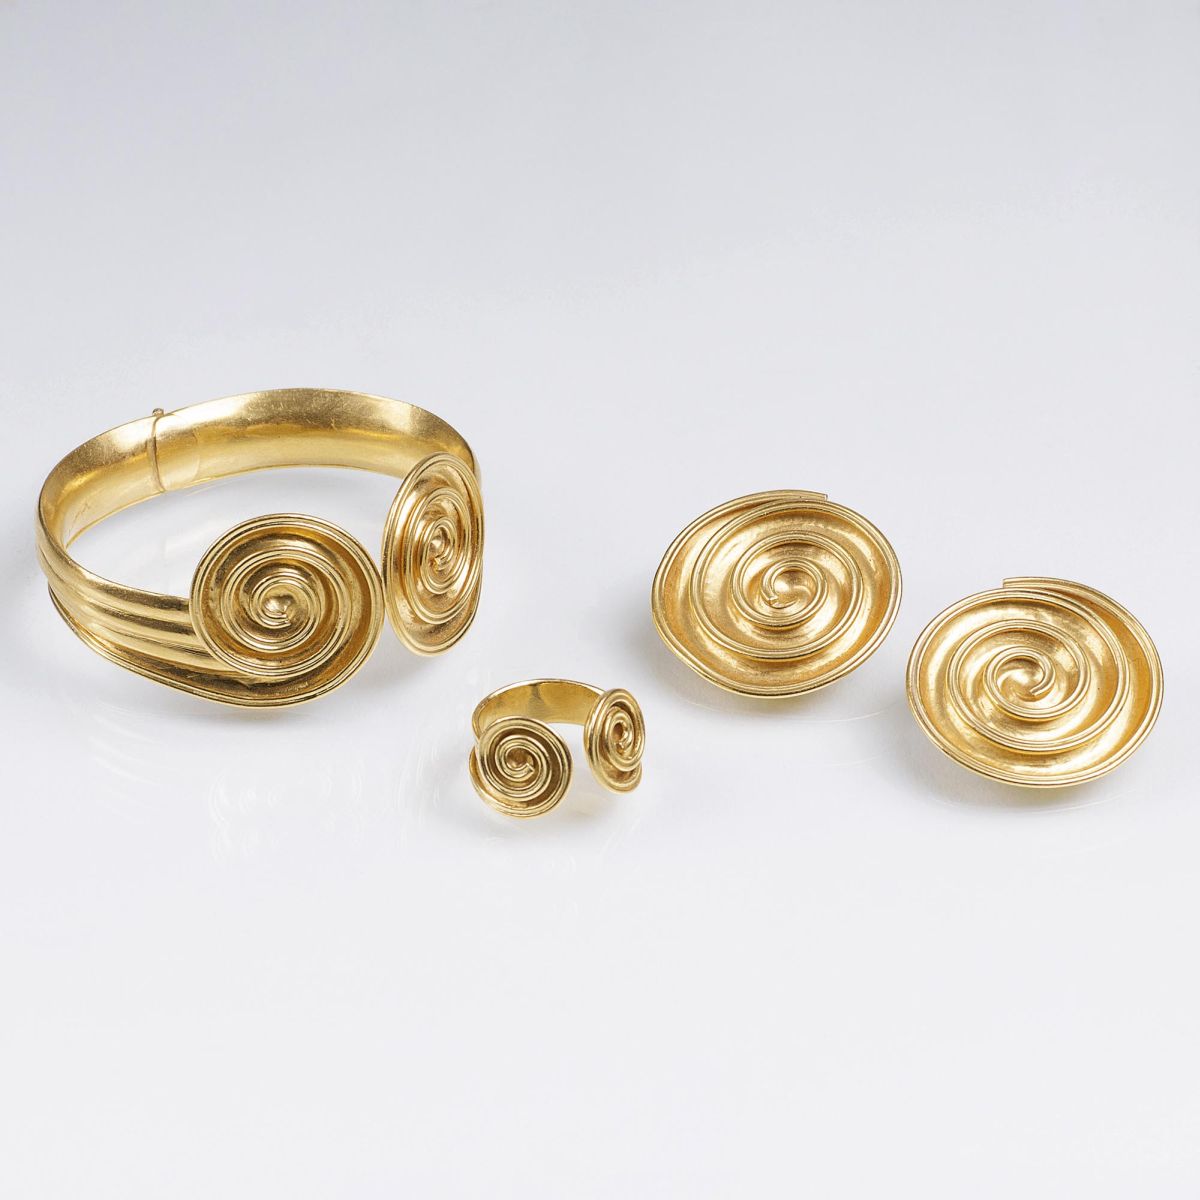 A Gold Jewelry Set 'Torque'